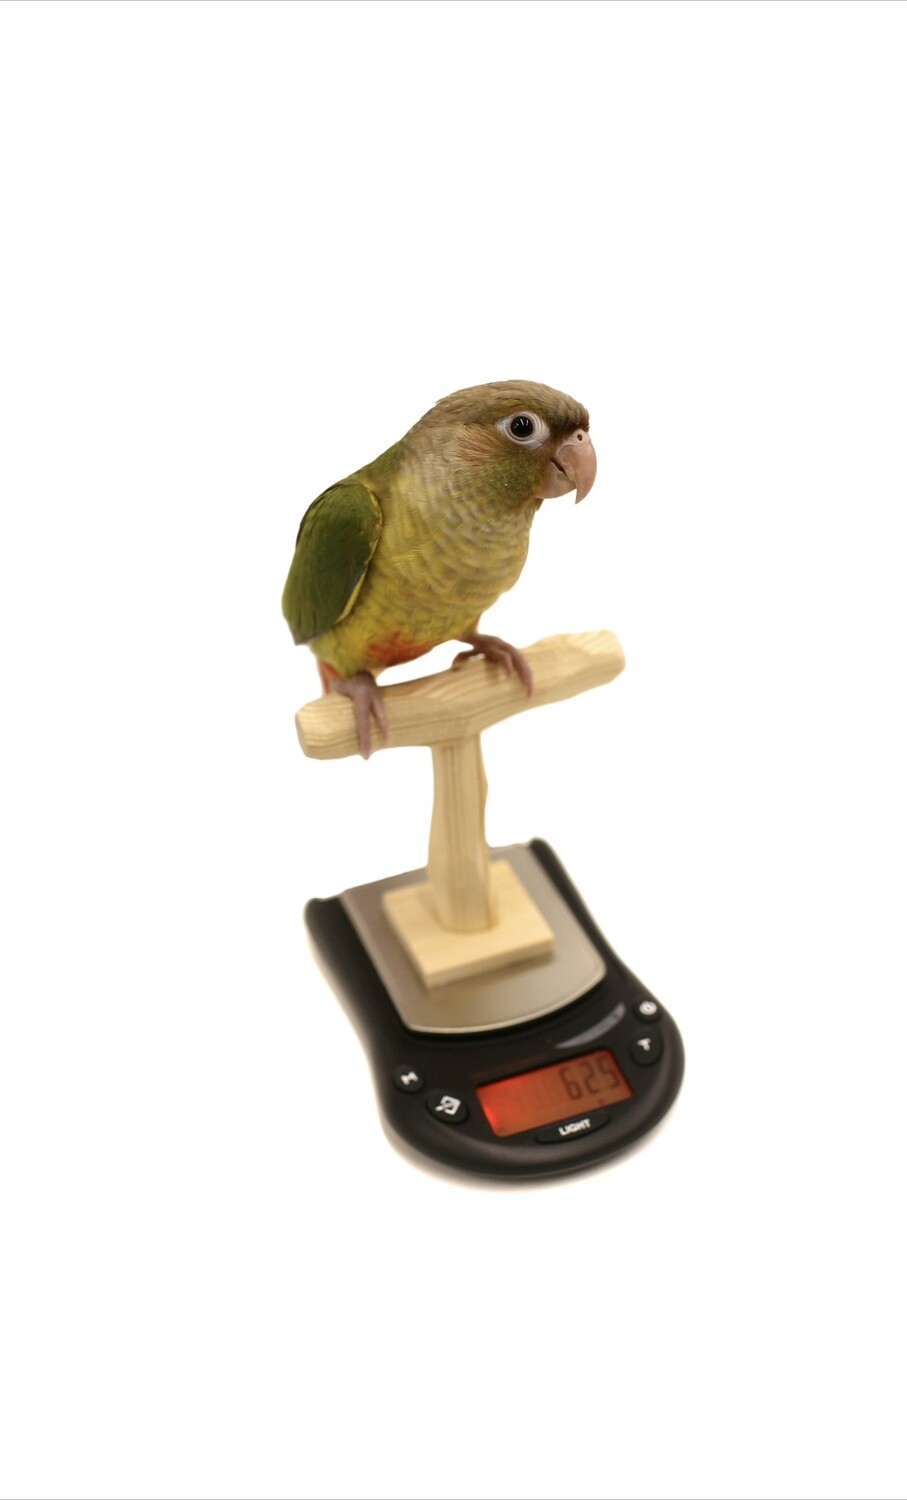 Mini Nu Perch Parrot Training Scale - for budgies, parrotlets, cockatiels, green cheek conures, etc